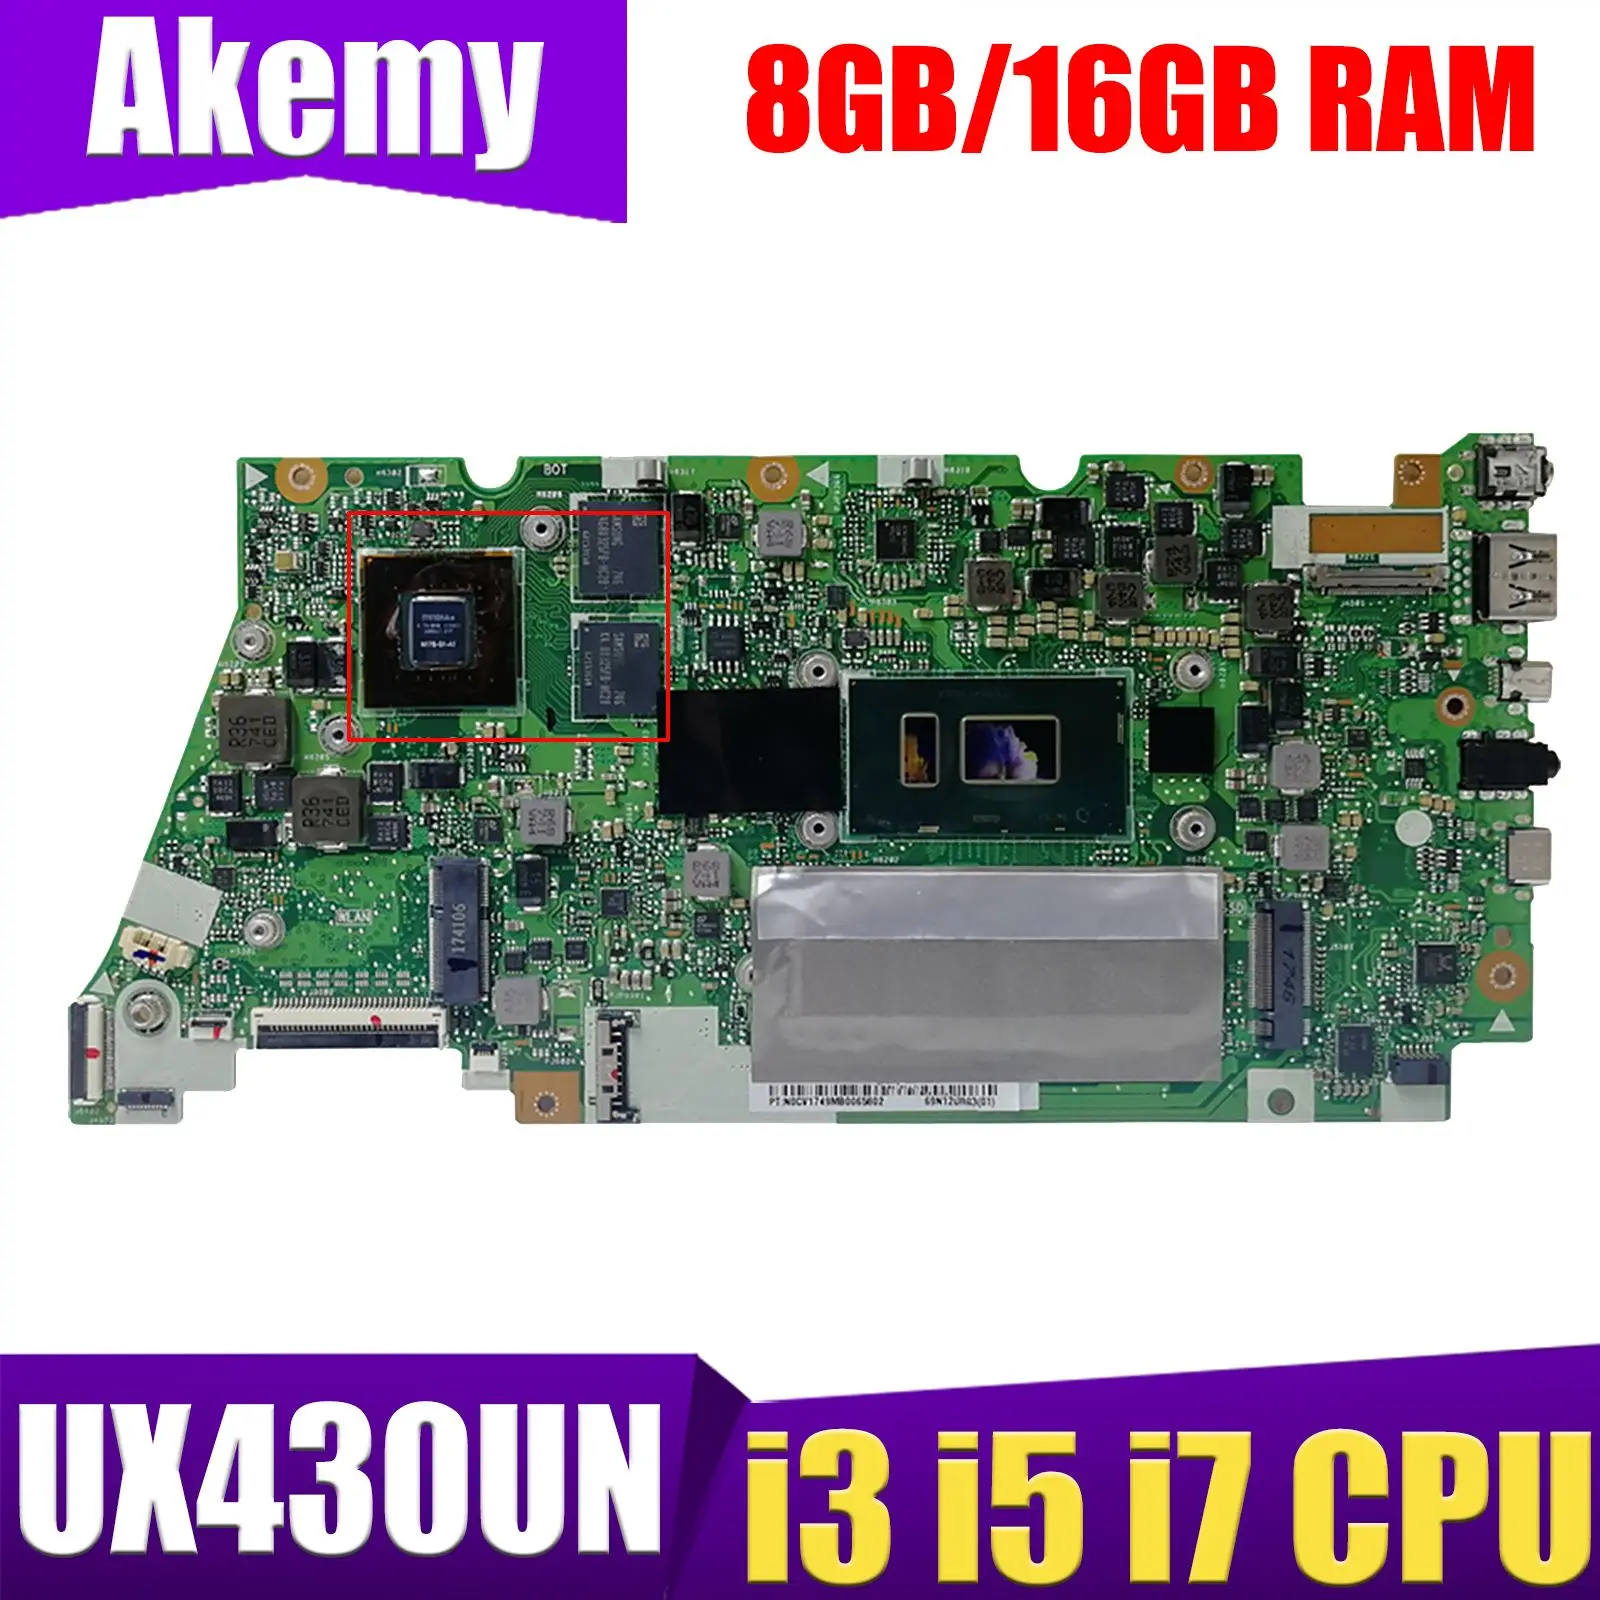 

UX430UN Notebook Mainboard GT940MX I3 I5 I7 CPU 8GB 16GB RAM for ASUS UX430U UX430UV UX430UNR UX430UQK U4300U Laptop Motherboard